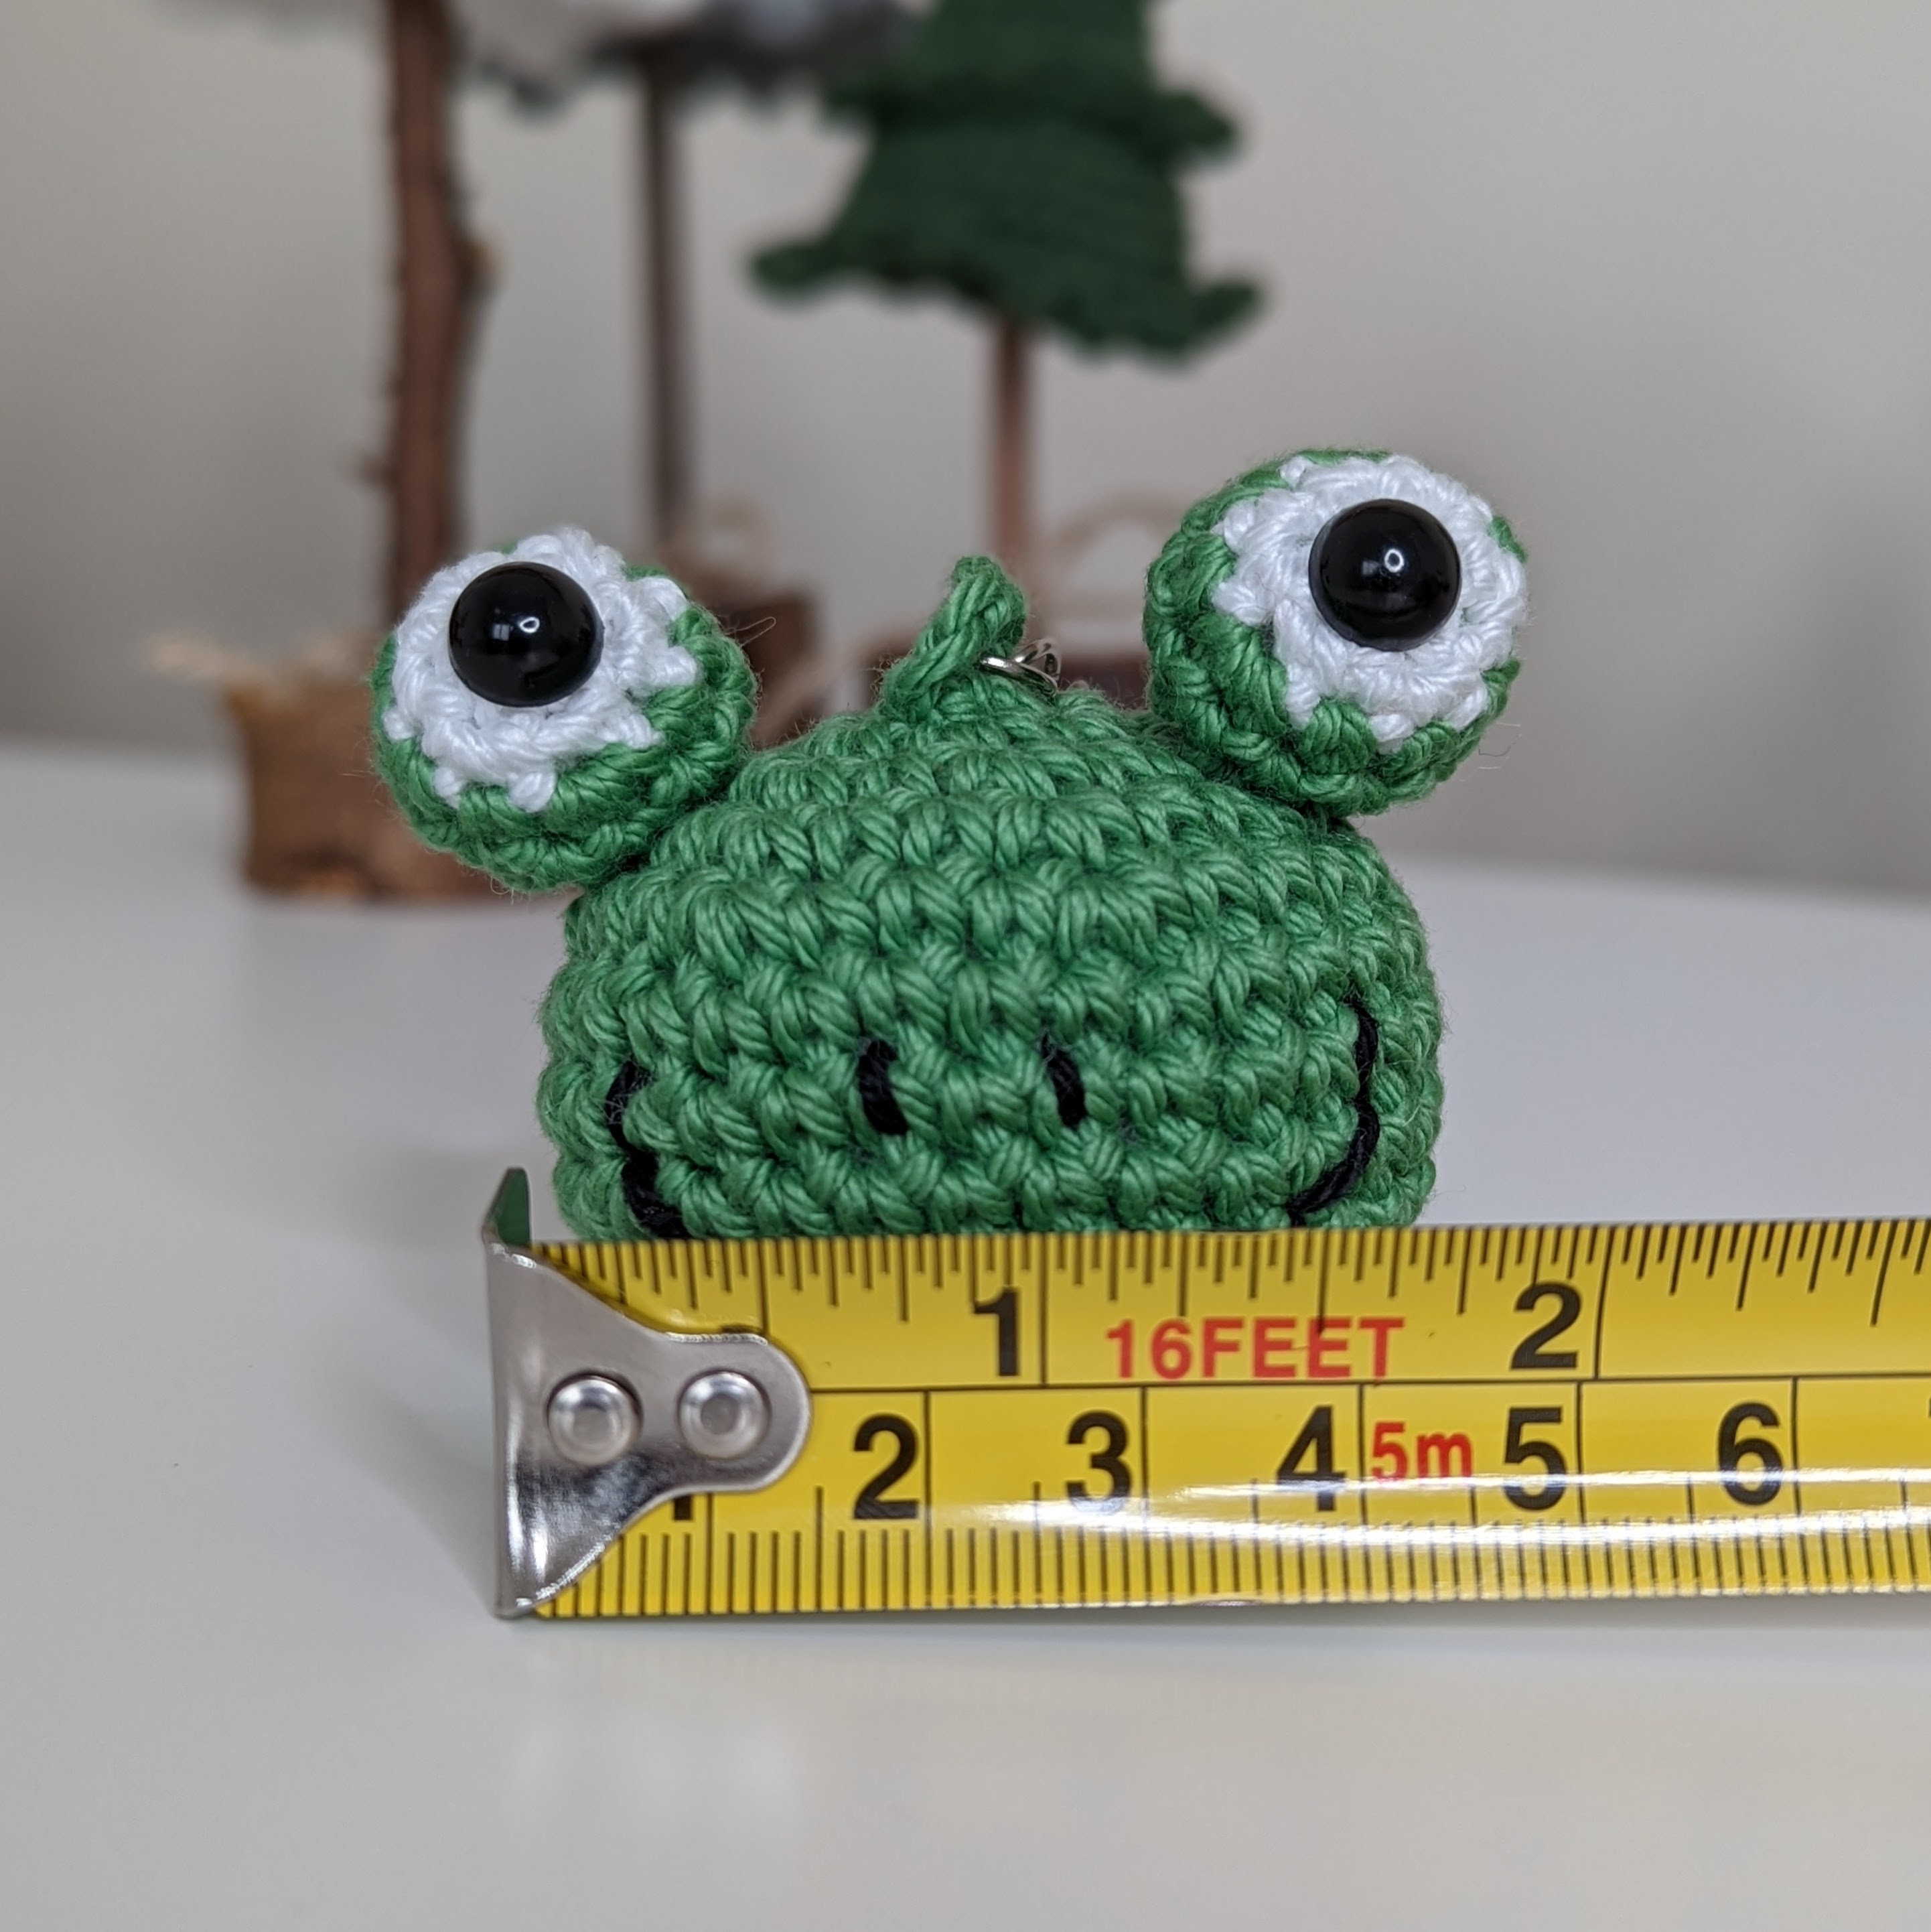 CrochetbyGreta Handmade Crochet Frog Keyring or Bag Charm | Amigurumi Frog | Handmade Gift